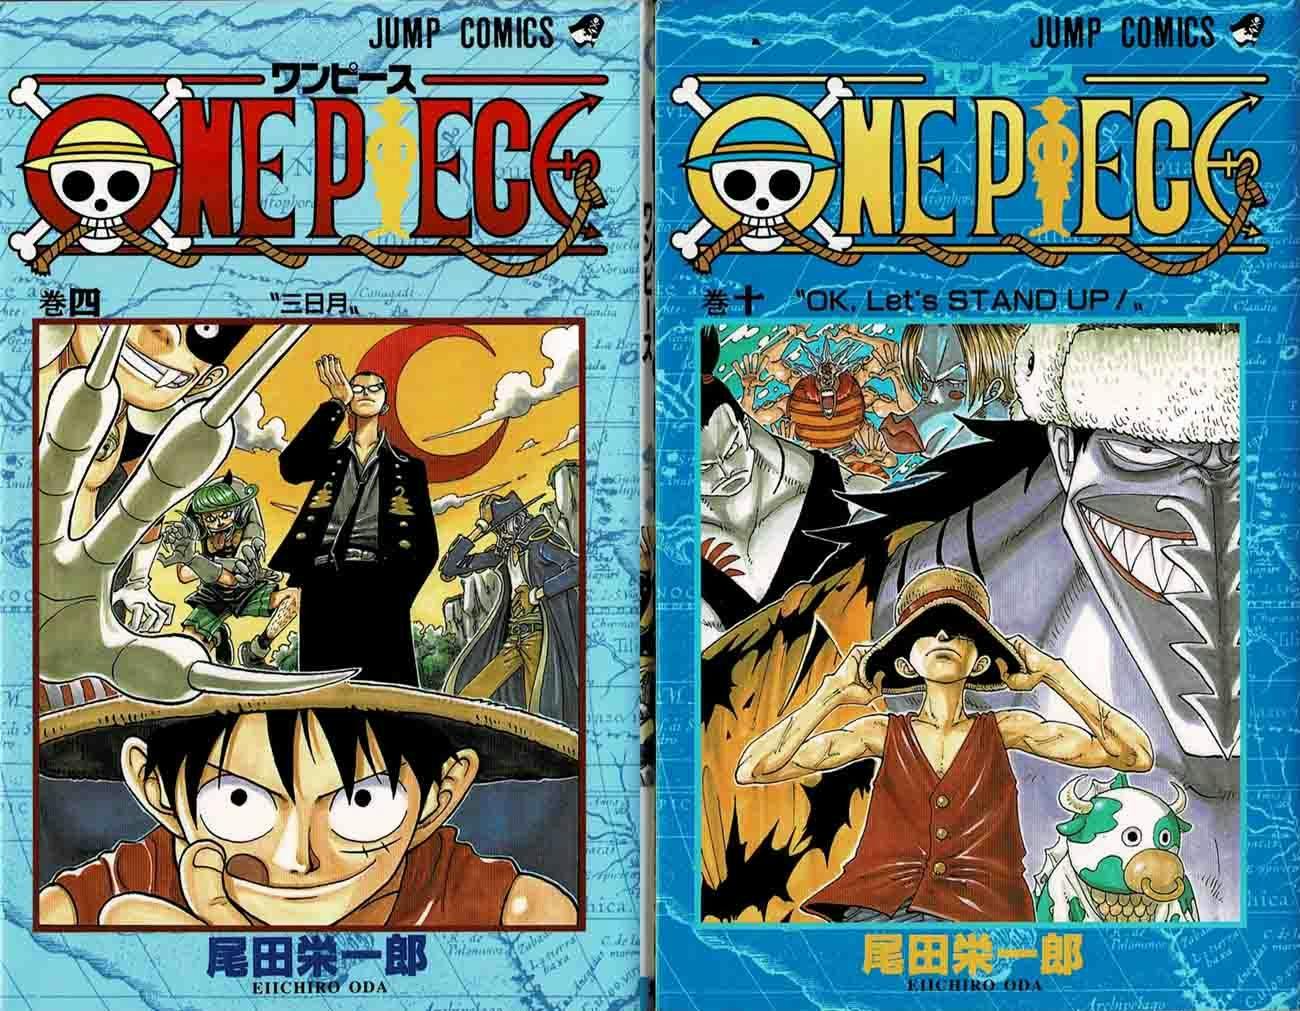 The manga cult favorite, One Piece.